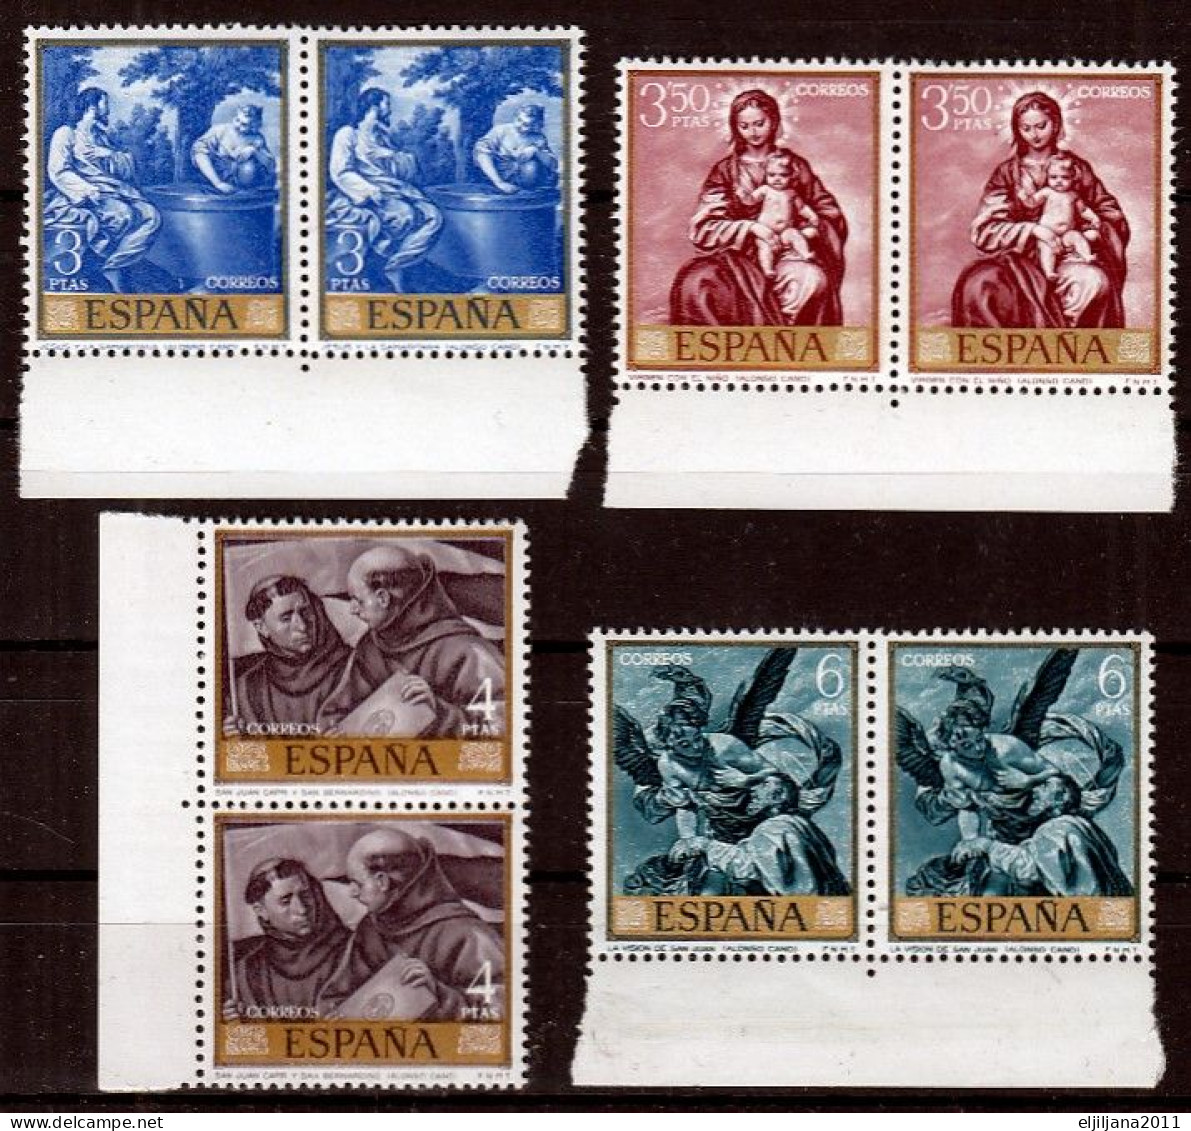 ⁕ SPAIN / ESPANA 1969 ⁕ Alonso Cano (stamp Day) Art Painting Gemalde Mi.1796-1805 X2 ⁕ MNH - Nuevos